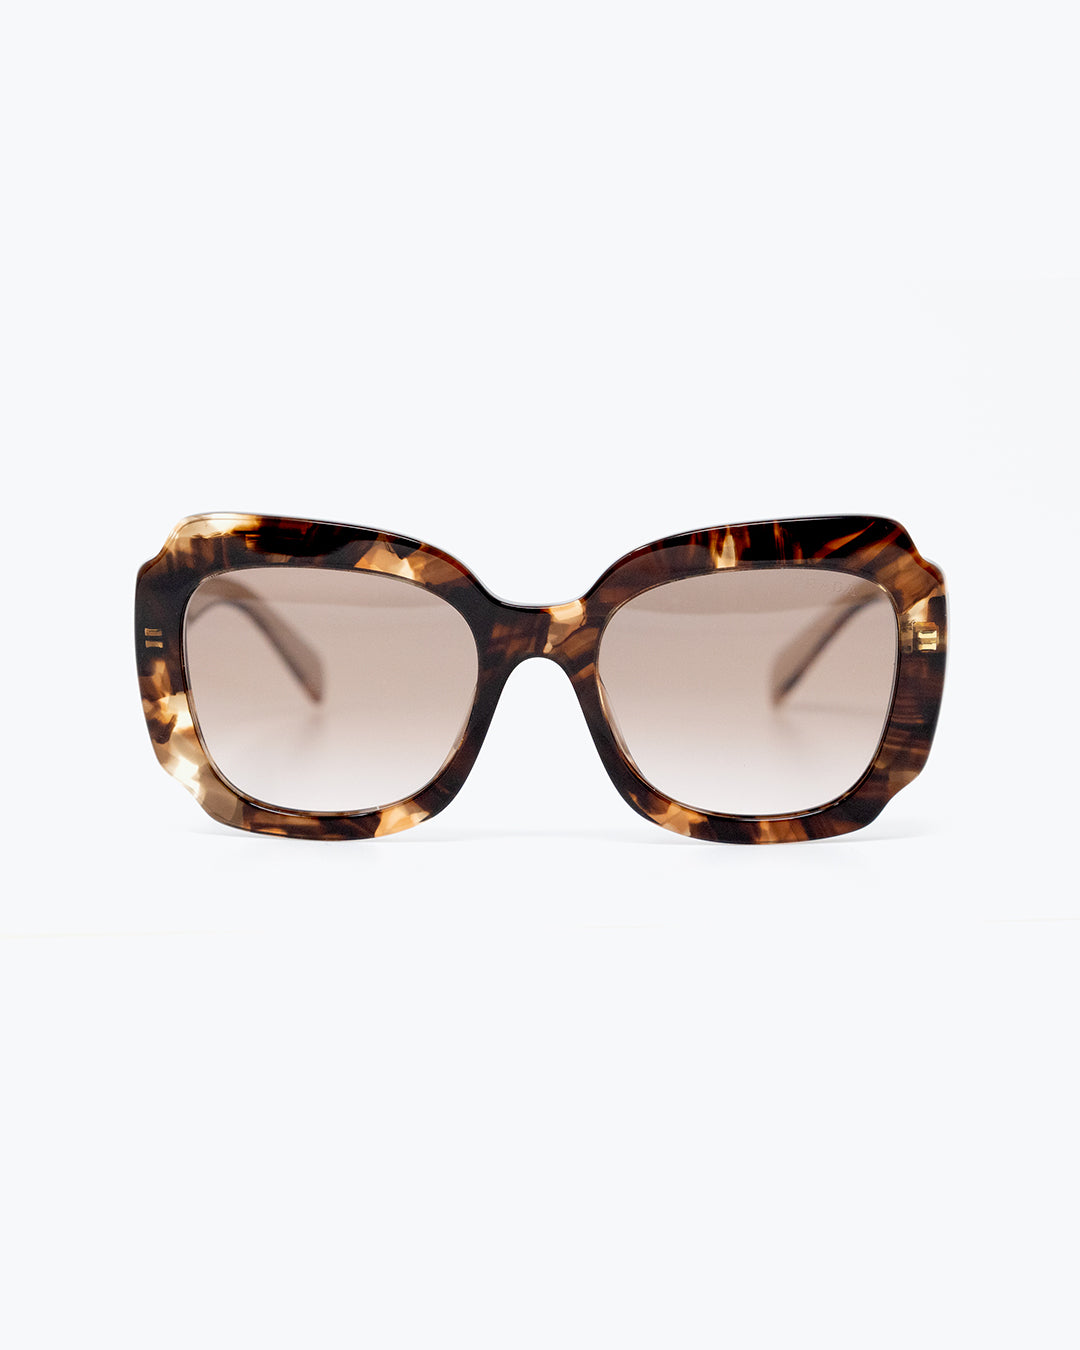 Prada Havana Brown Sunglasses - Model PR16YS